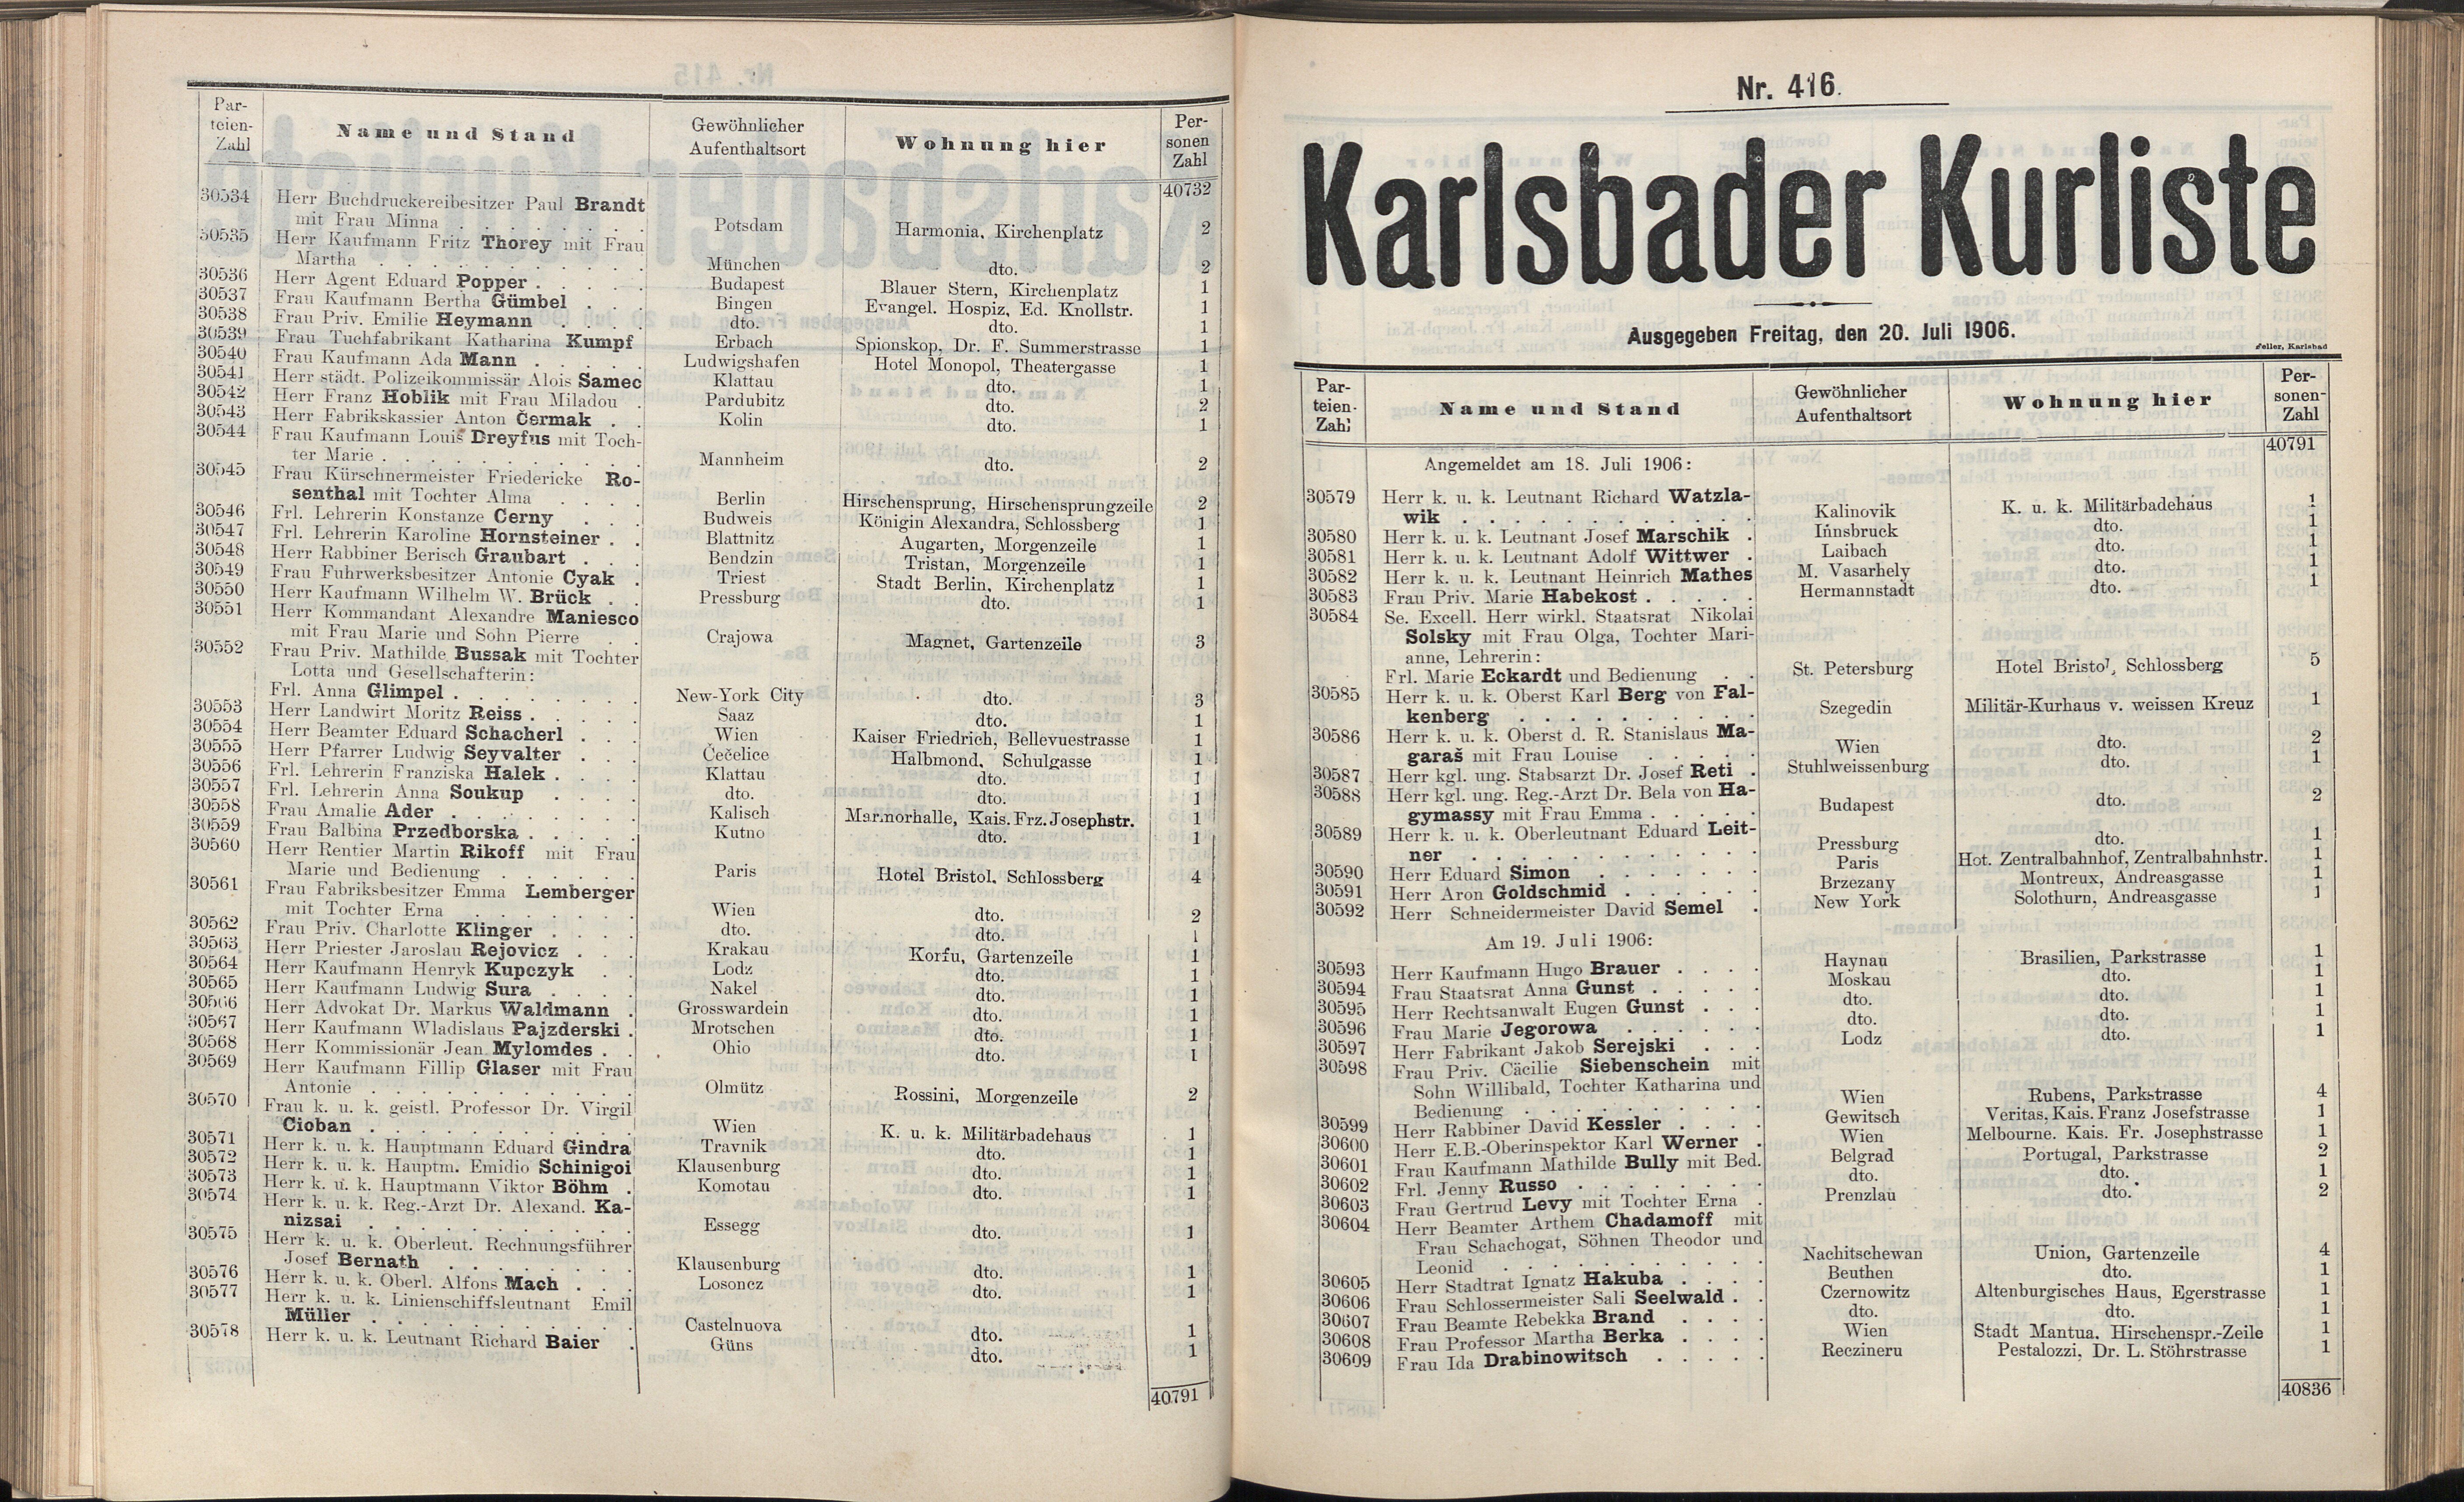 531. soap-kv_knihovna_karlsbader-kurliste-1906_5320